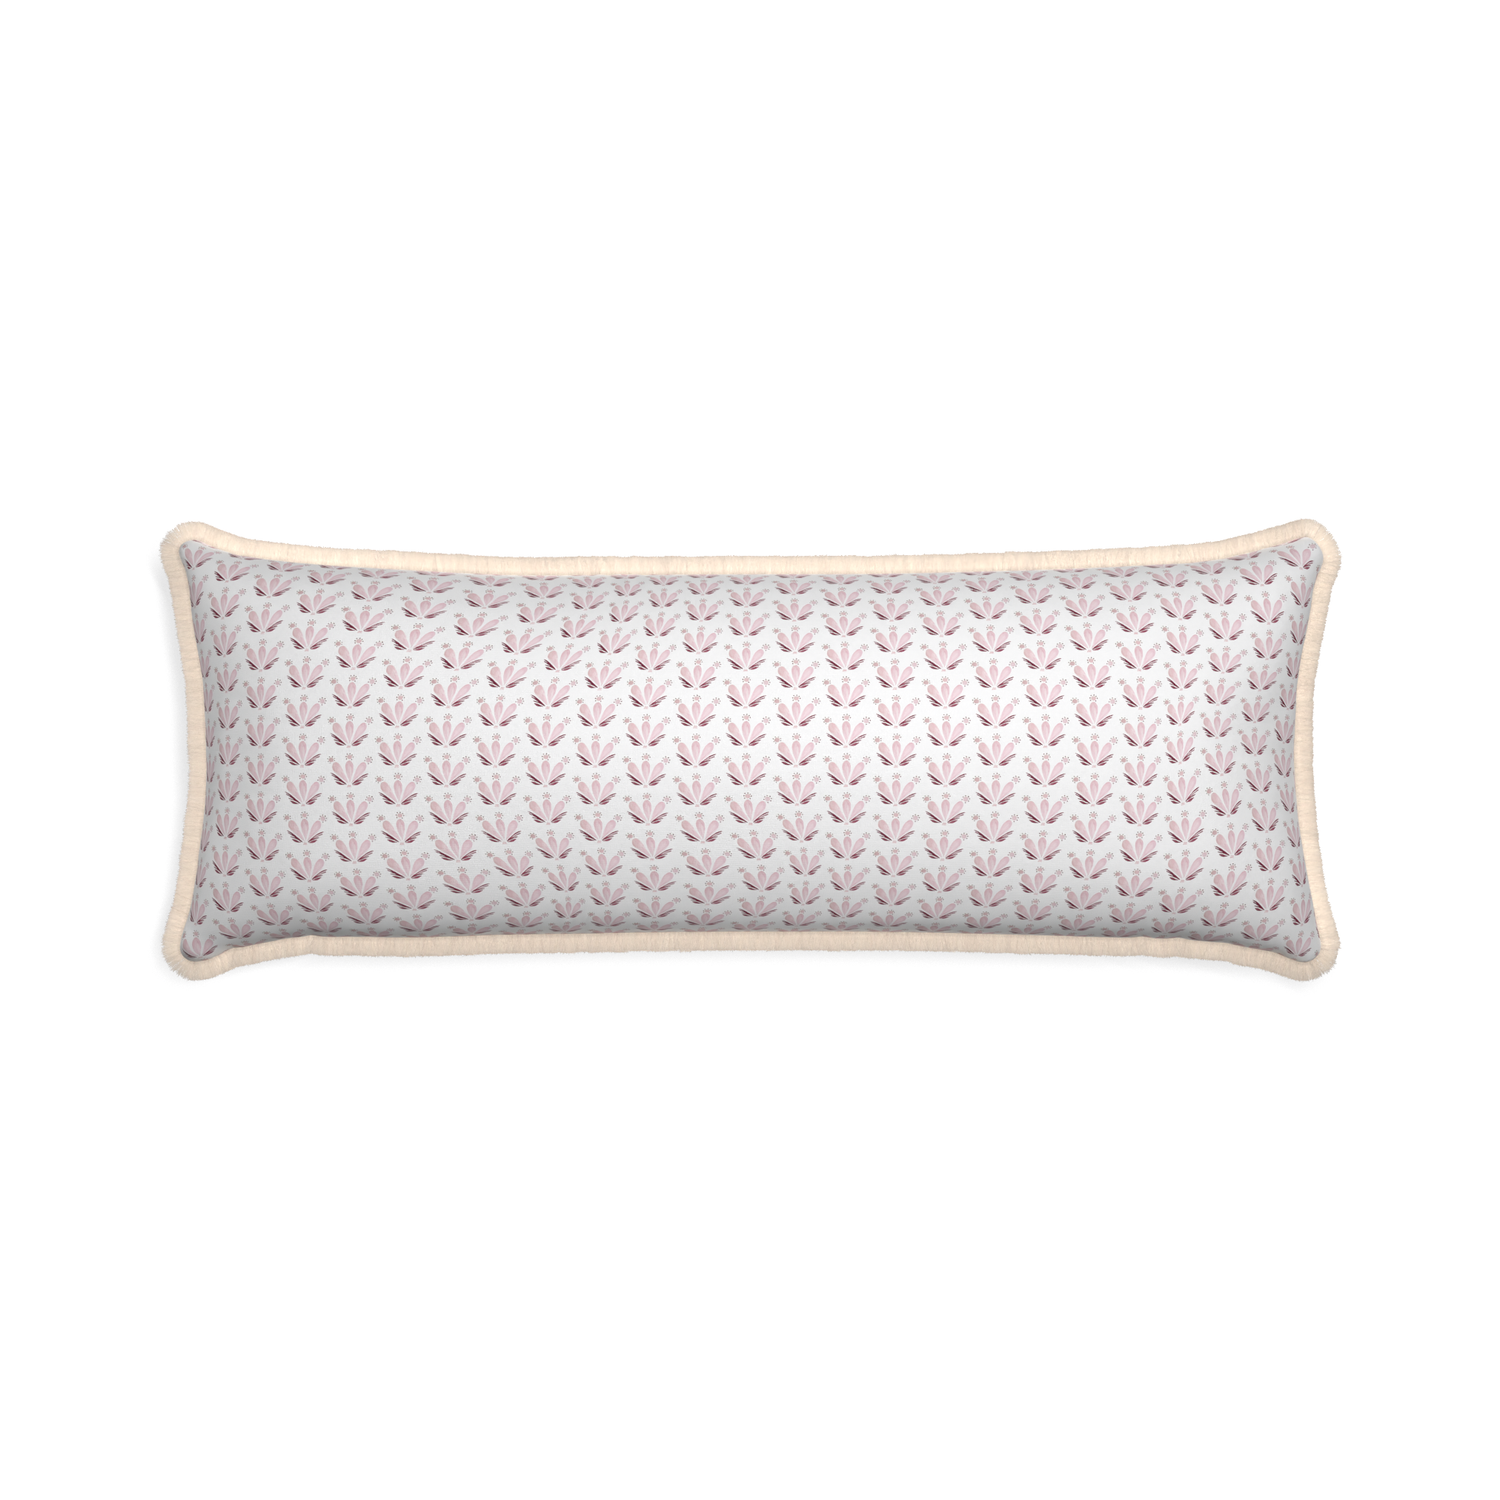 Xl-lumbar serena pink custom pillow with cream fringe on white background